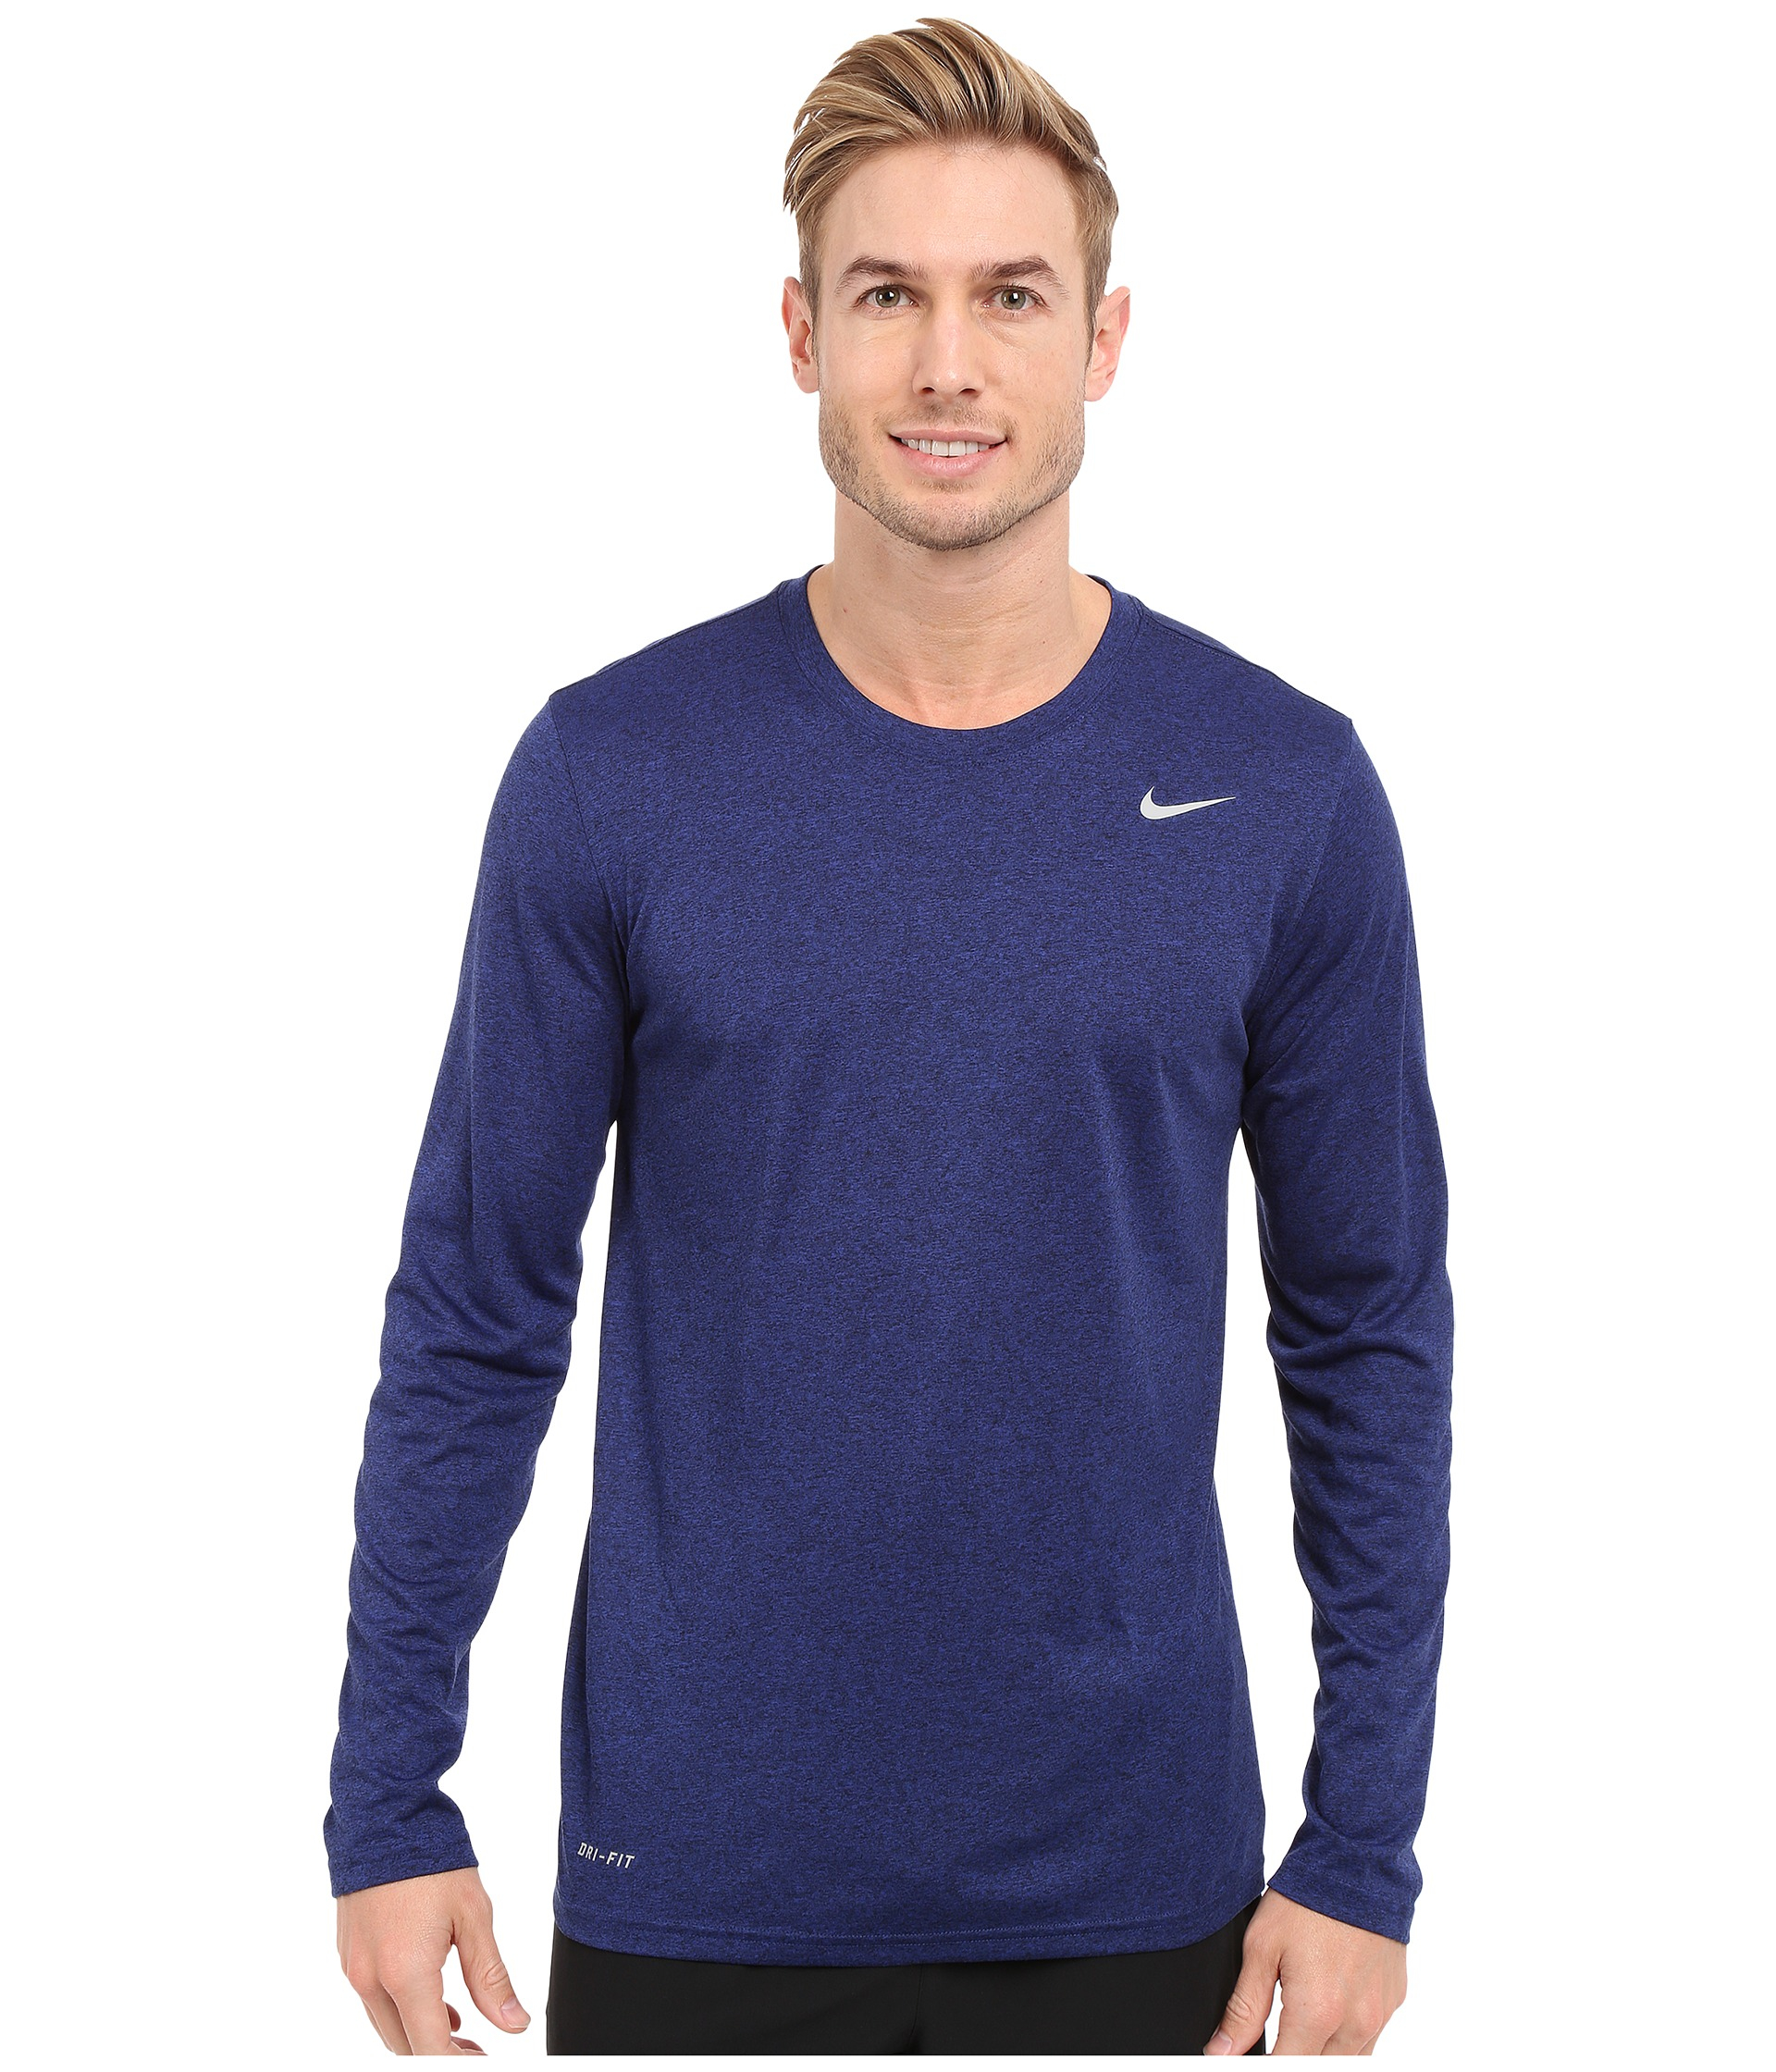 Nike Synthetic Legend 2.0 Long Sleeve Tee in Blue for Men - Lyst